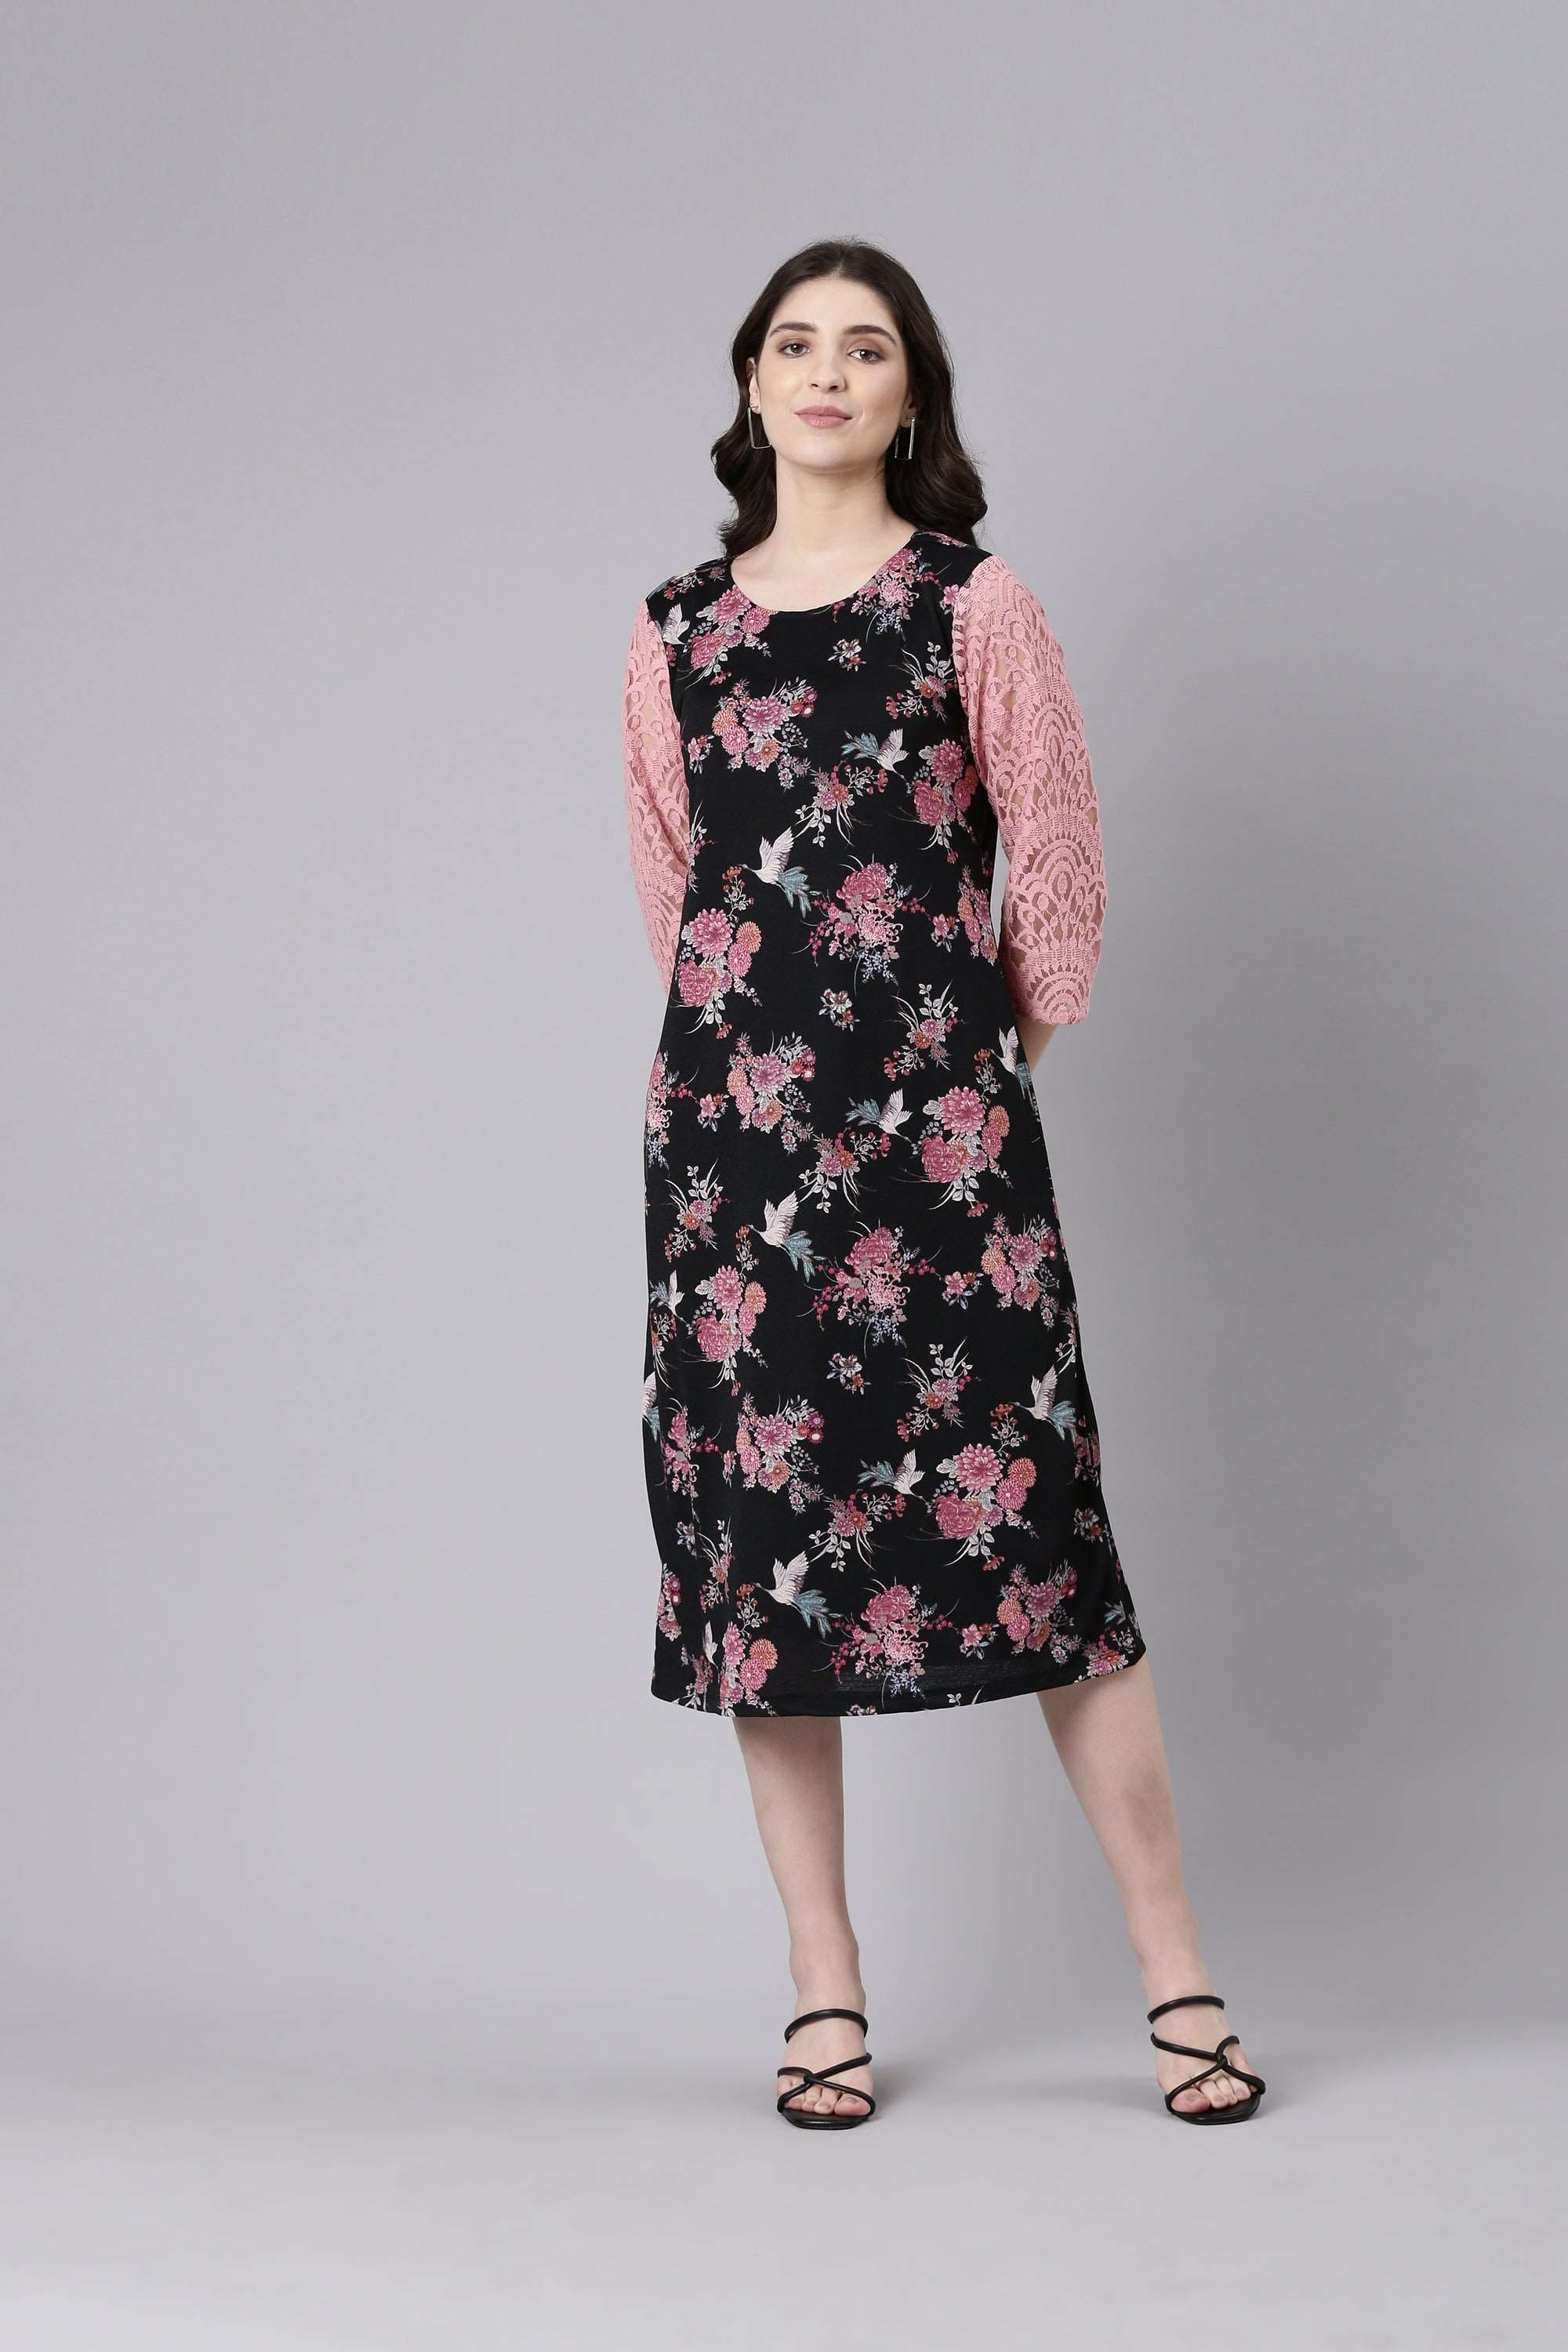 TheShaili Women's Round Neck Three Quater Sleeves Floral Design Maxi Dress